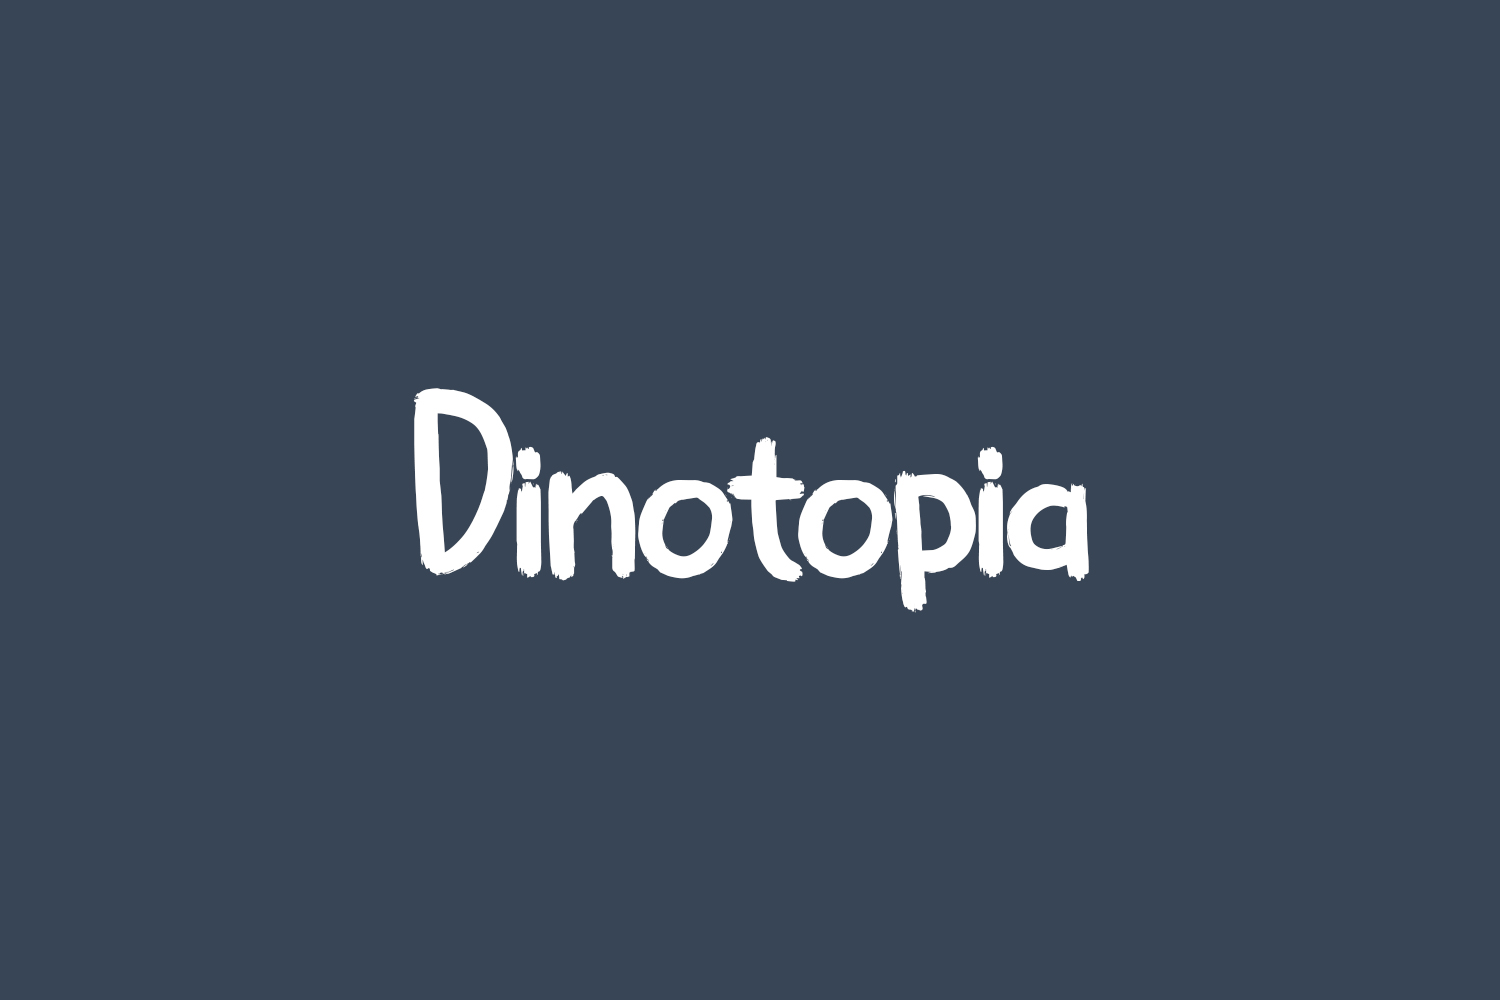 Dinotopia Free Font